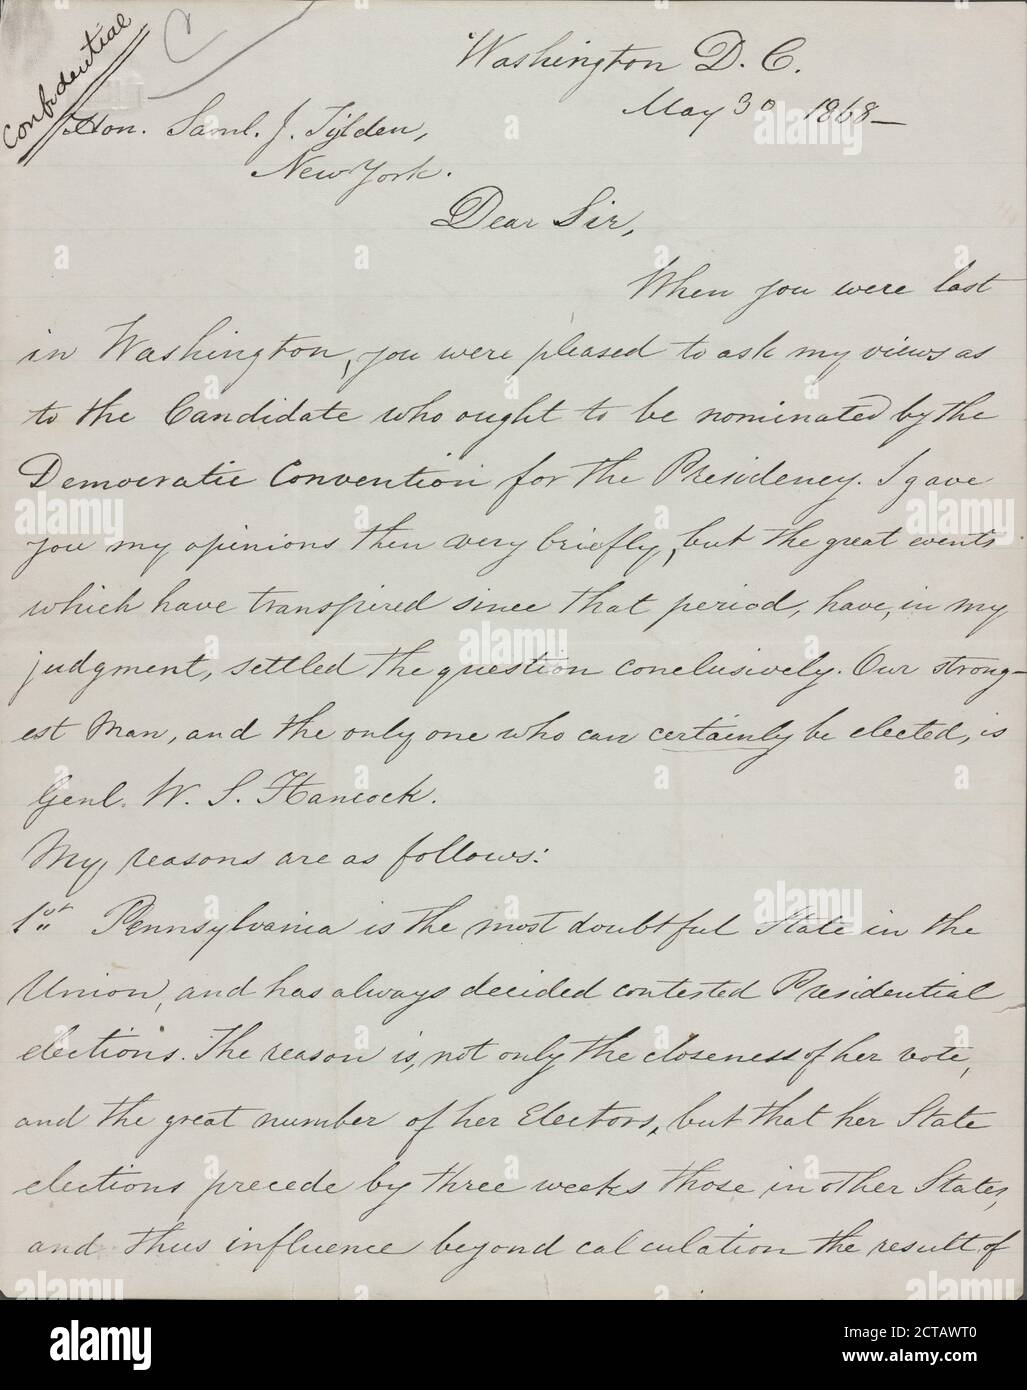 Walker, Robert, text, Correspondence, 1868 Stock Photo